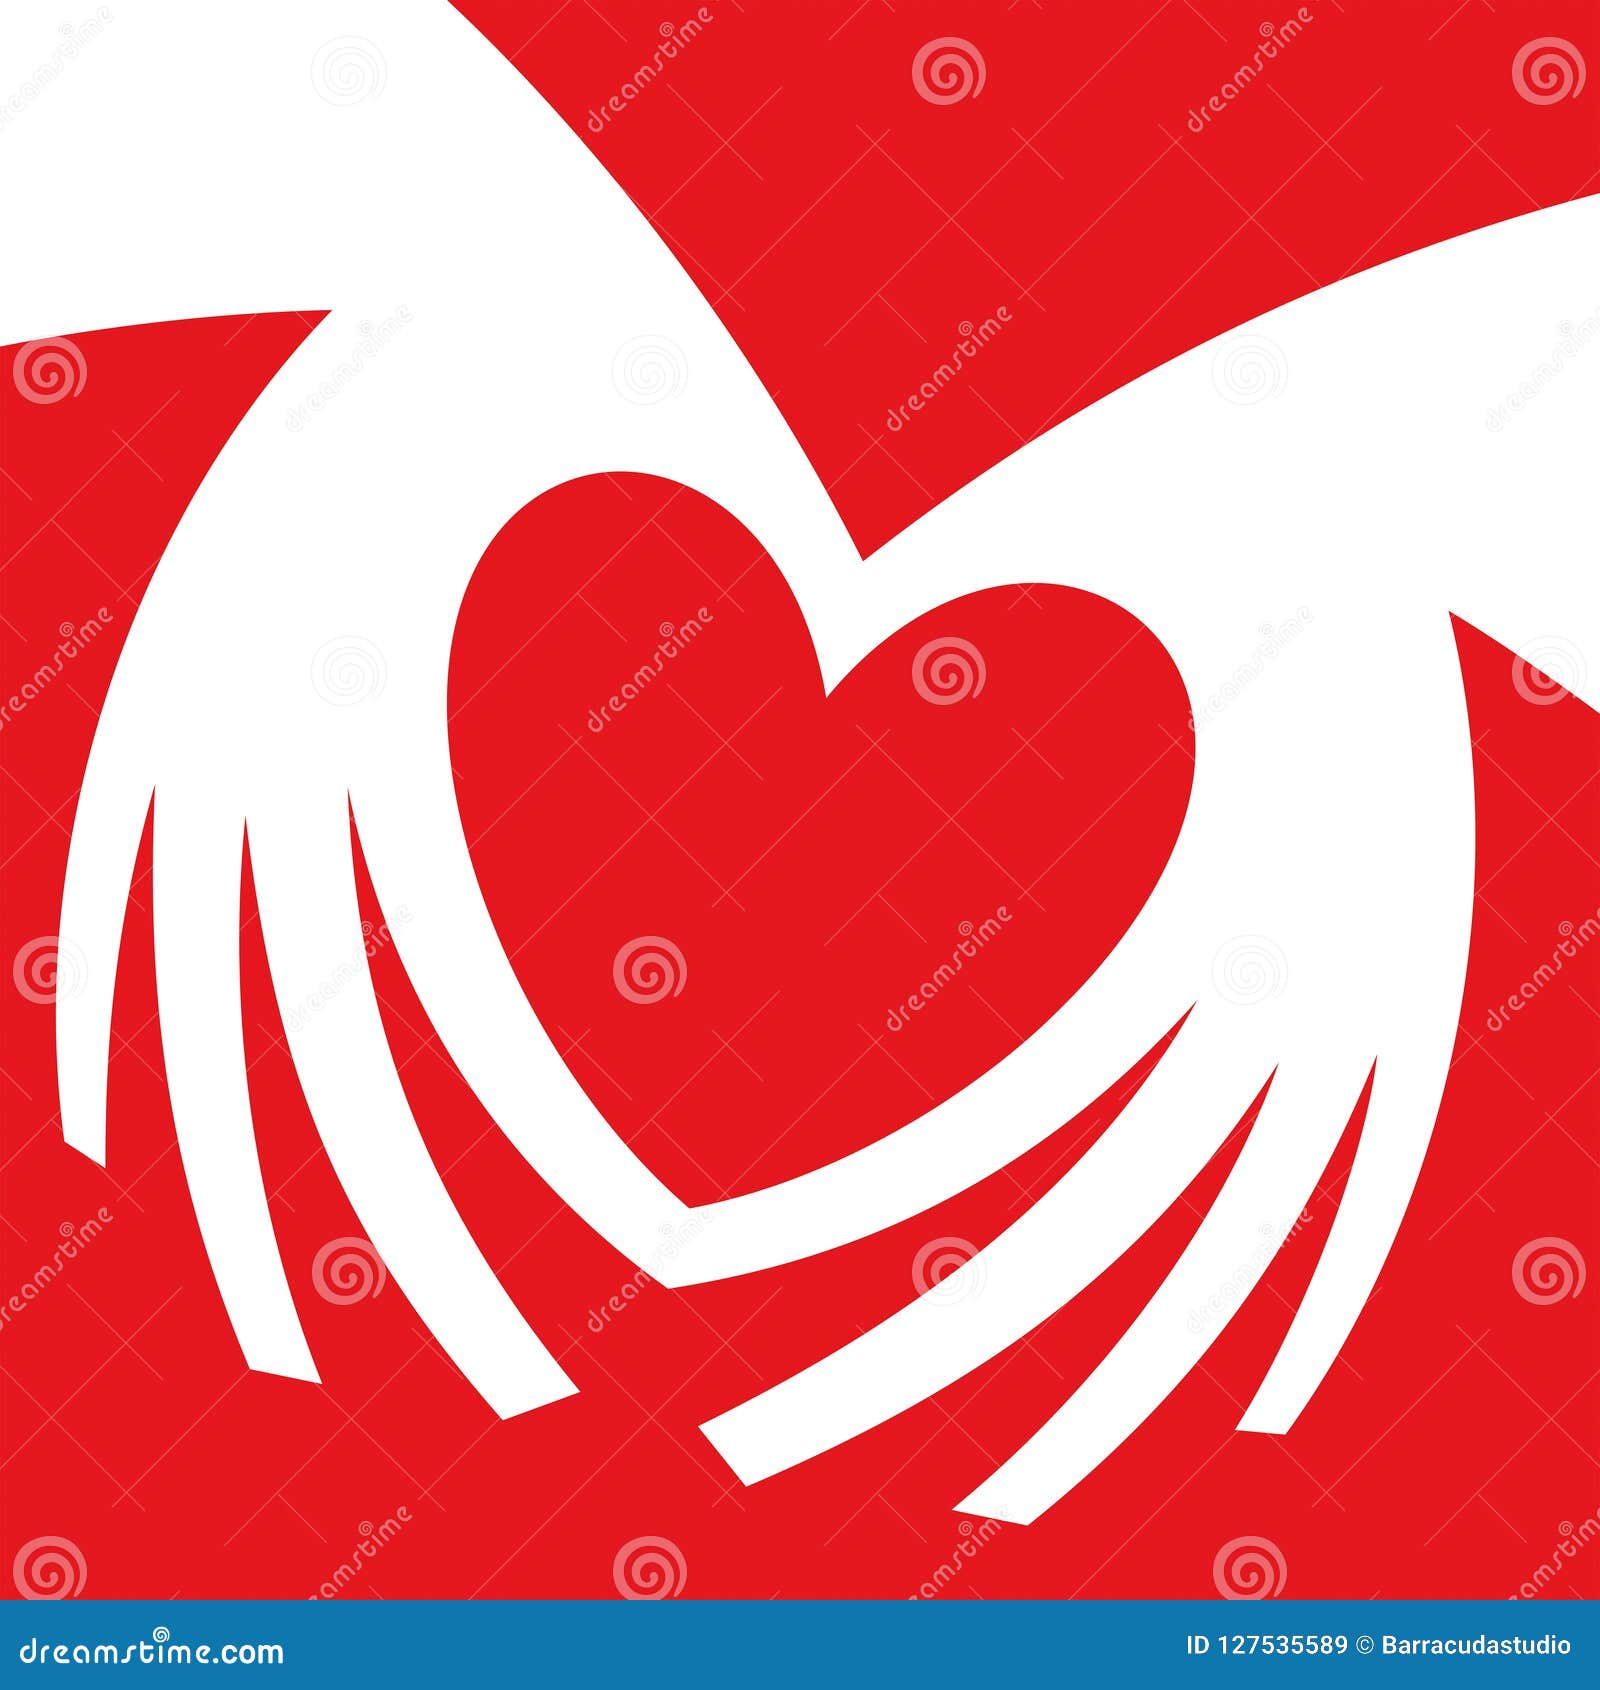 Heart Shaped Hands. Hand Heart Gesture Stock Vector - Illustration of ...